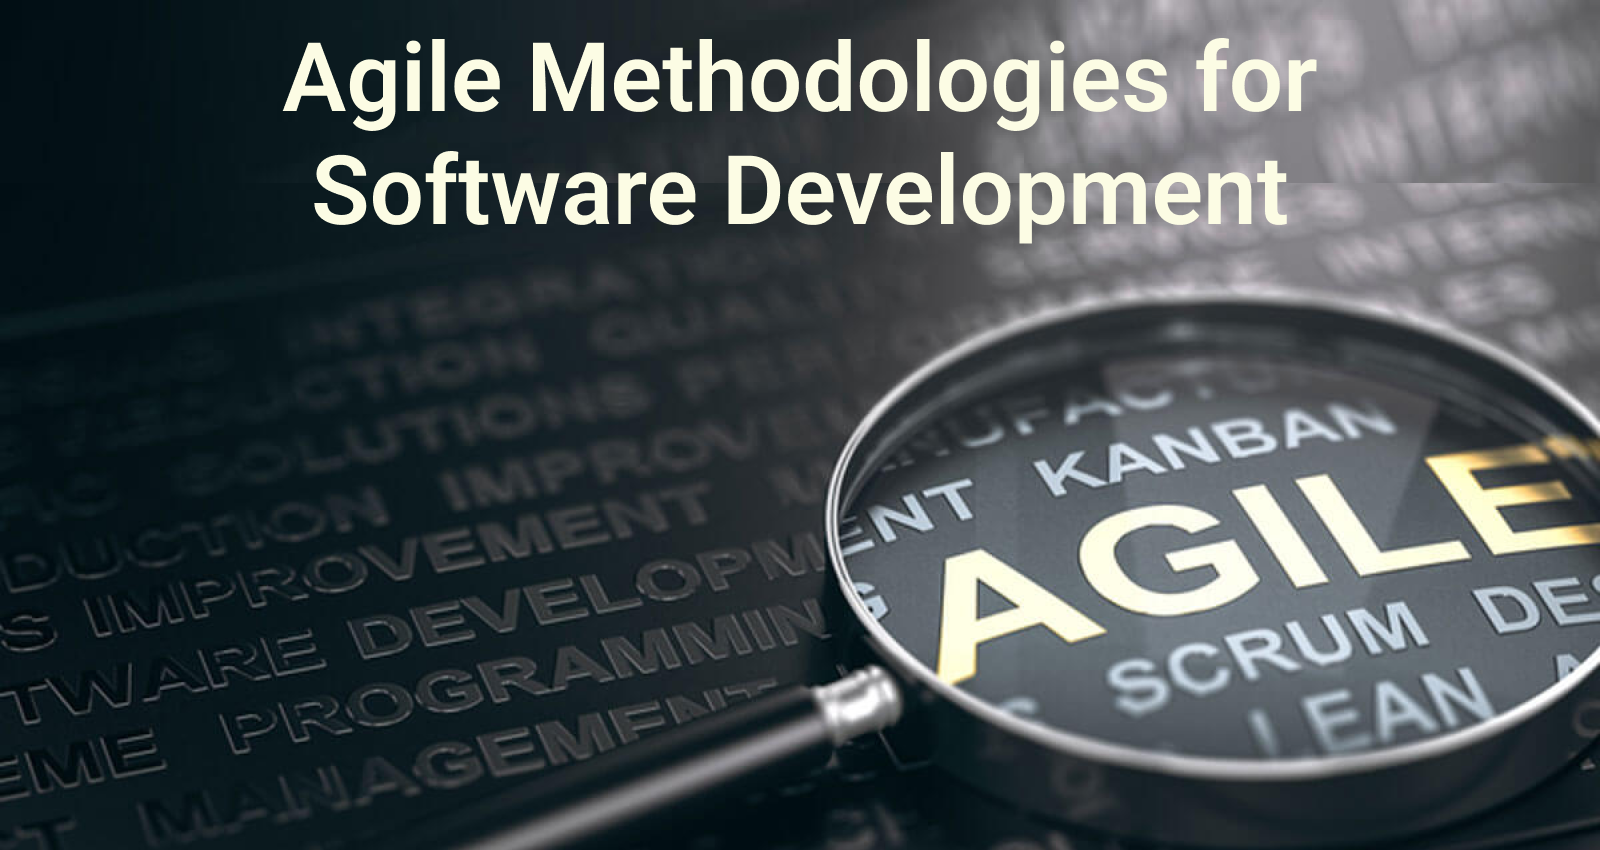 Agile Methods for Software Development, Software Development, Agile Methodologies, Empirical Process Control.